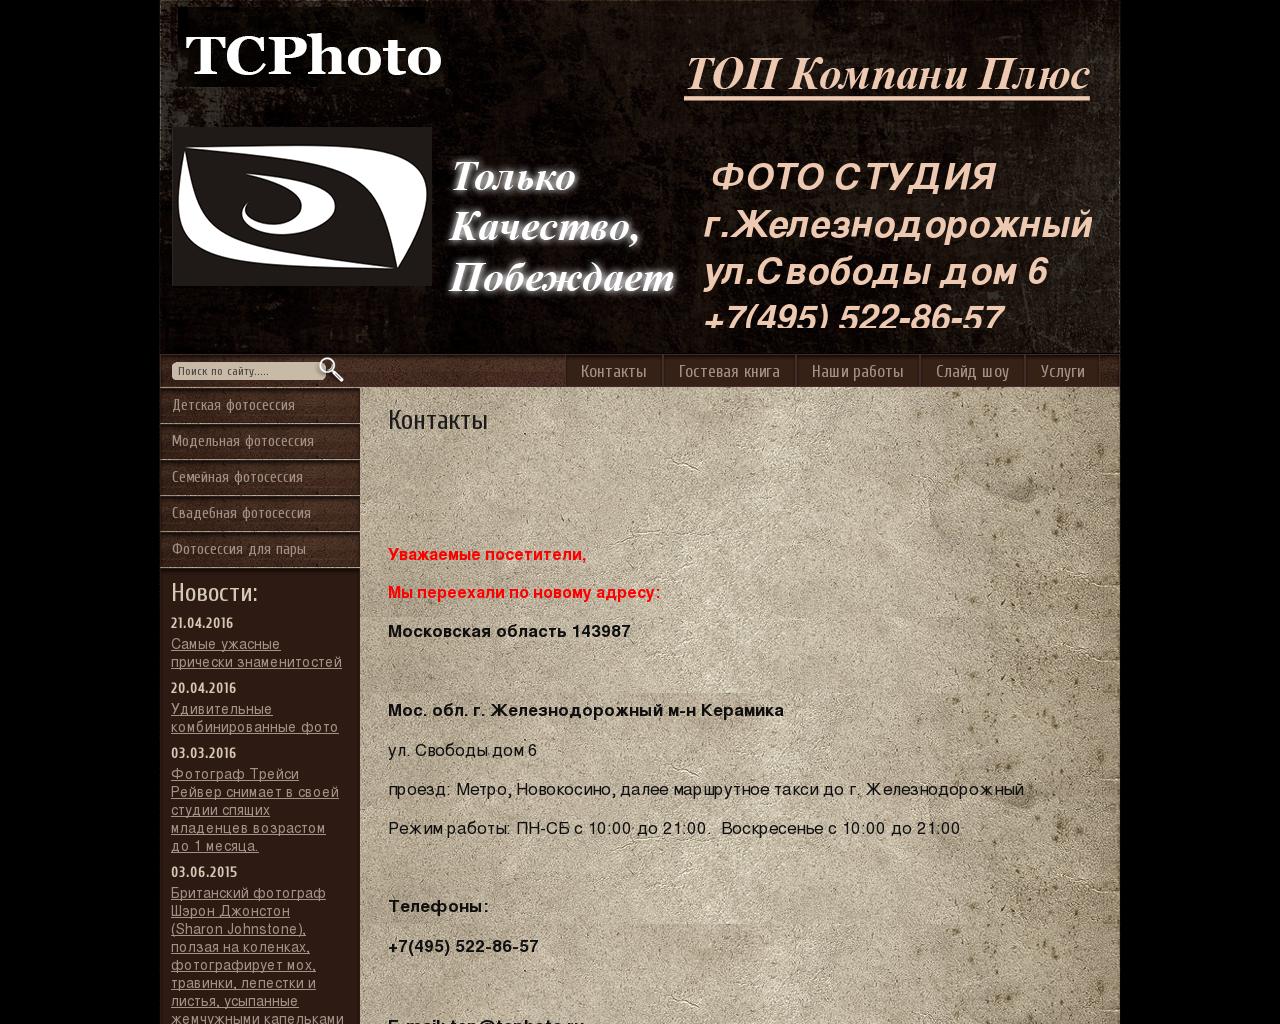 Изображение сайта tcphoto.ru в разрешении 1280x1024